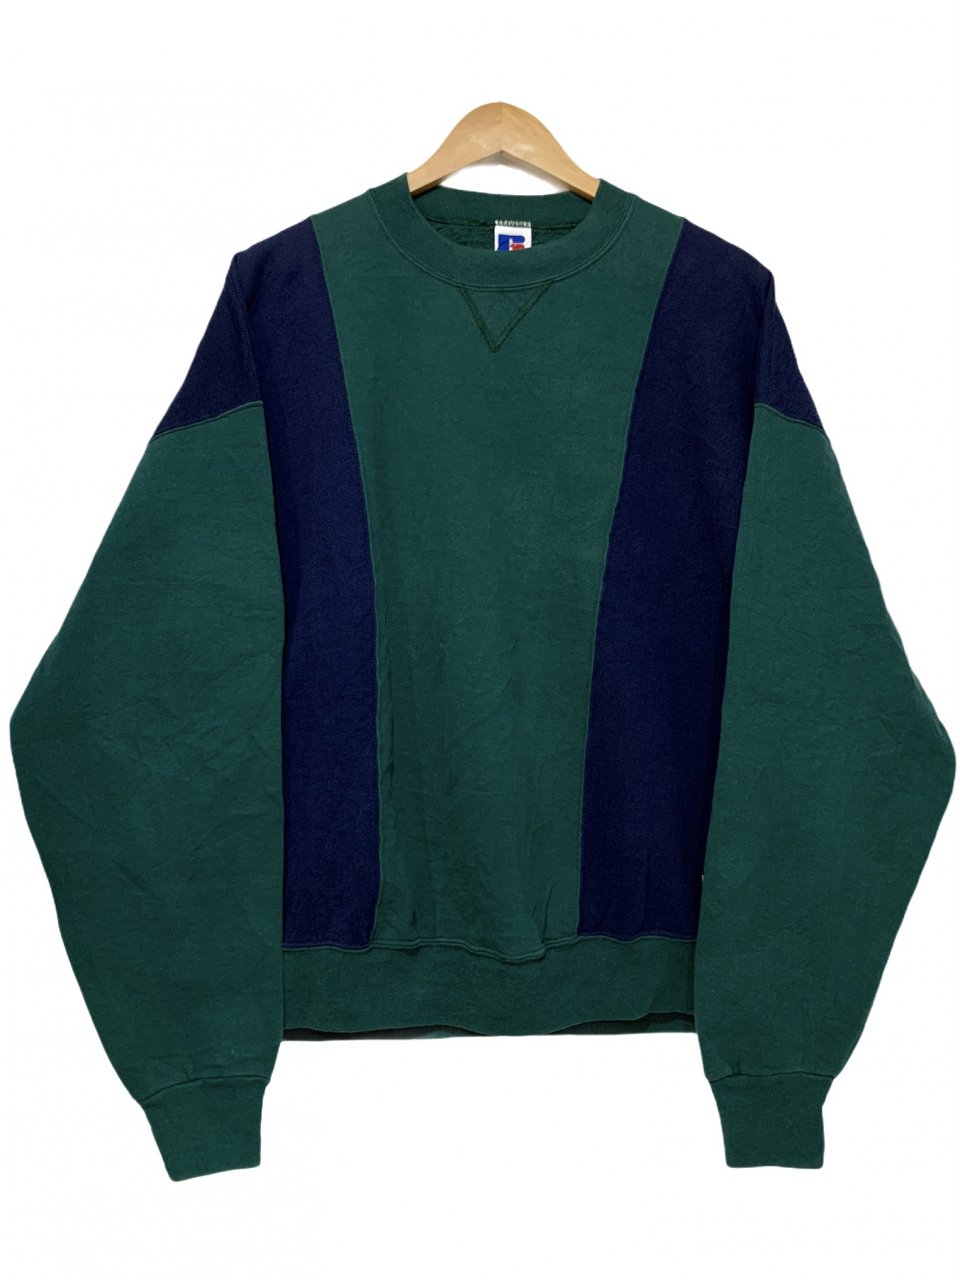 USA製 s RUSSEL ATHLETIC 2 Tone Sweatshirt 紺緑 XL ラッセル